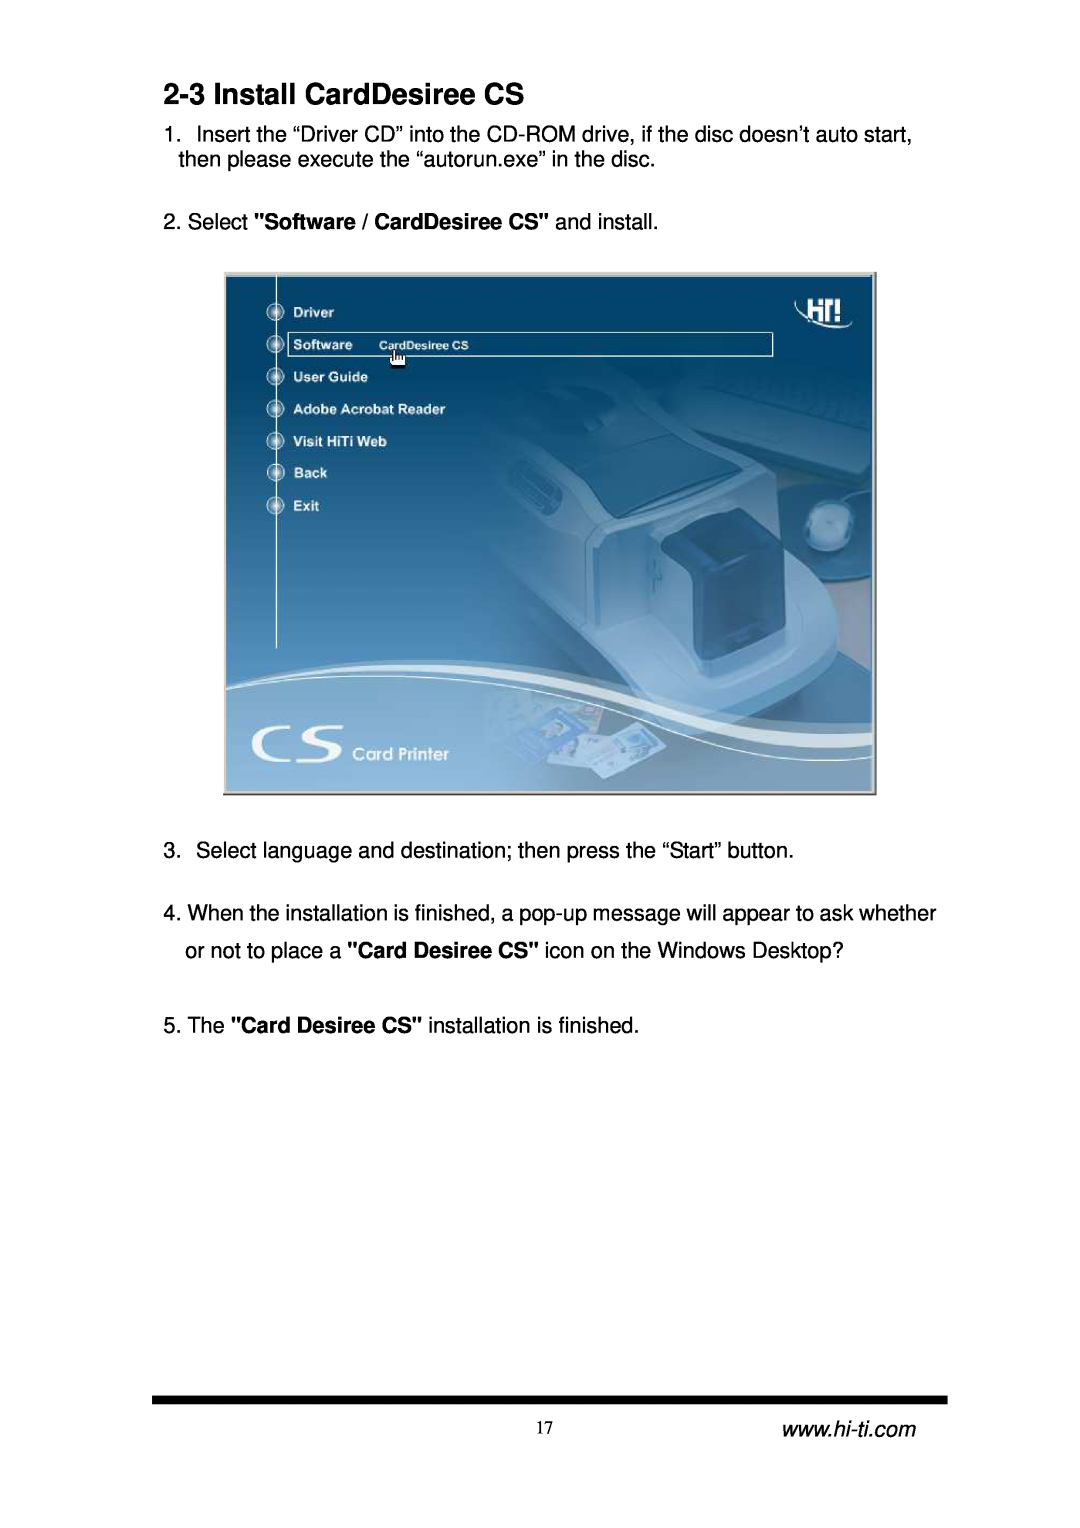 Hi-Touch Imaging Technologies CS-300 user manual Install CardDesiree CS, Select Software / CardDesiree CS and install 